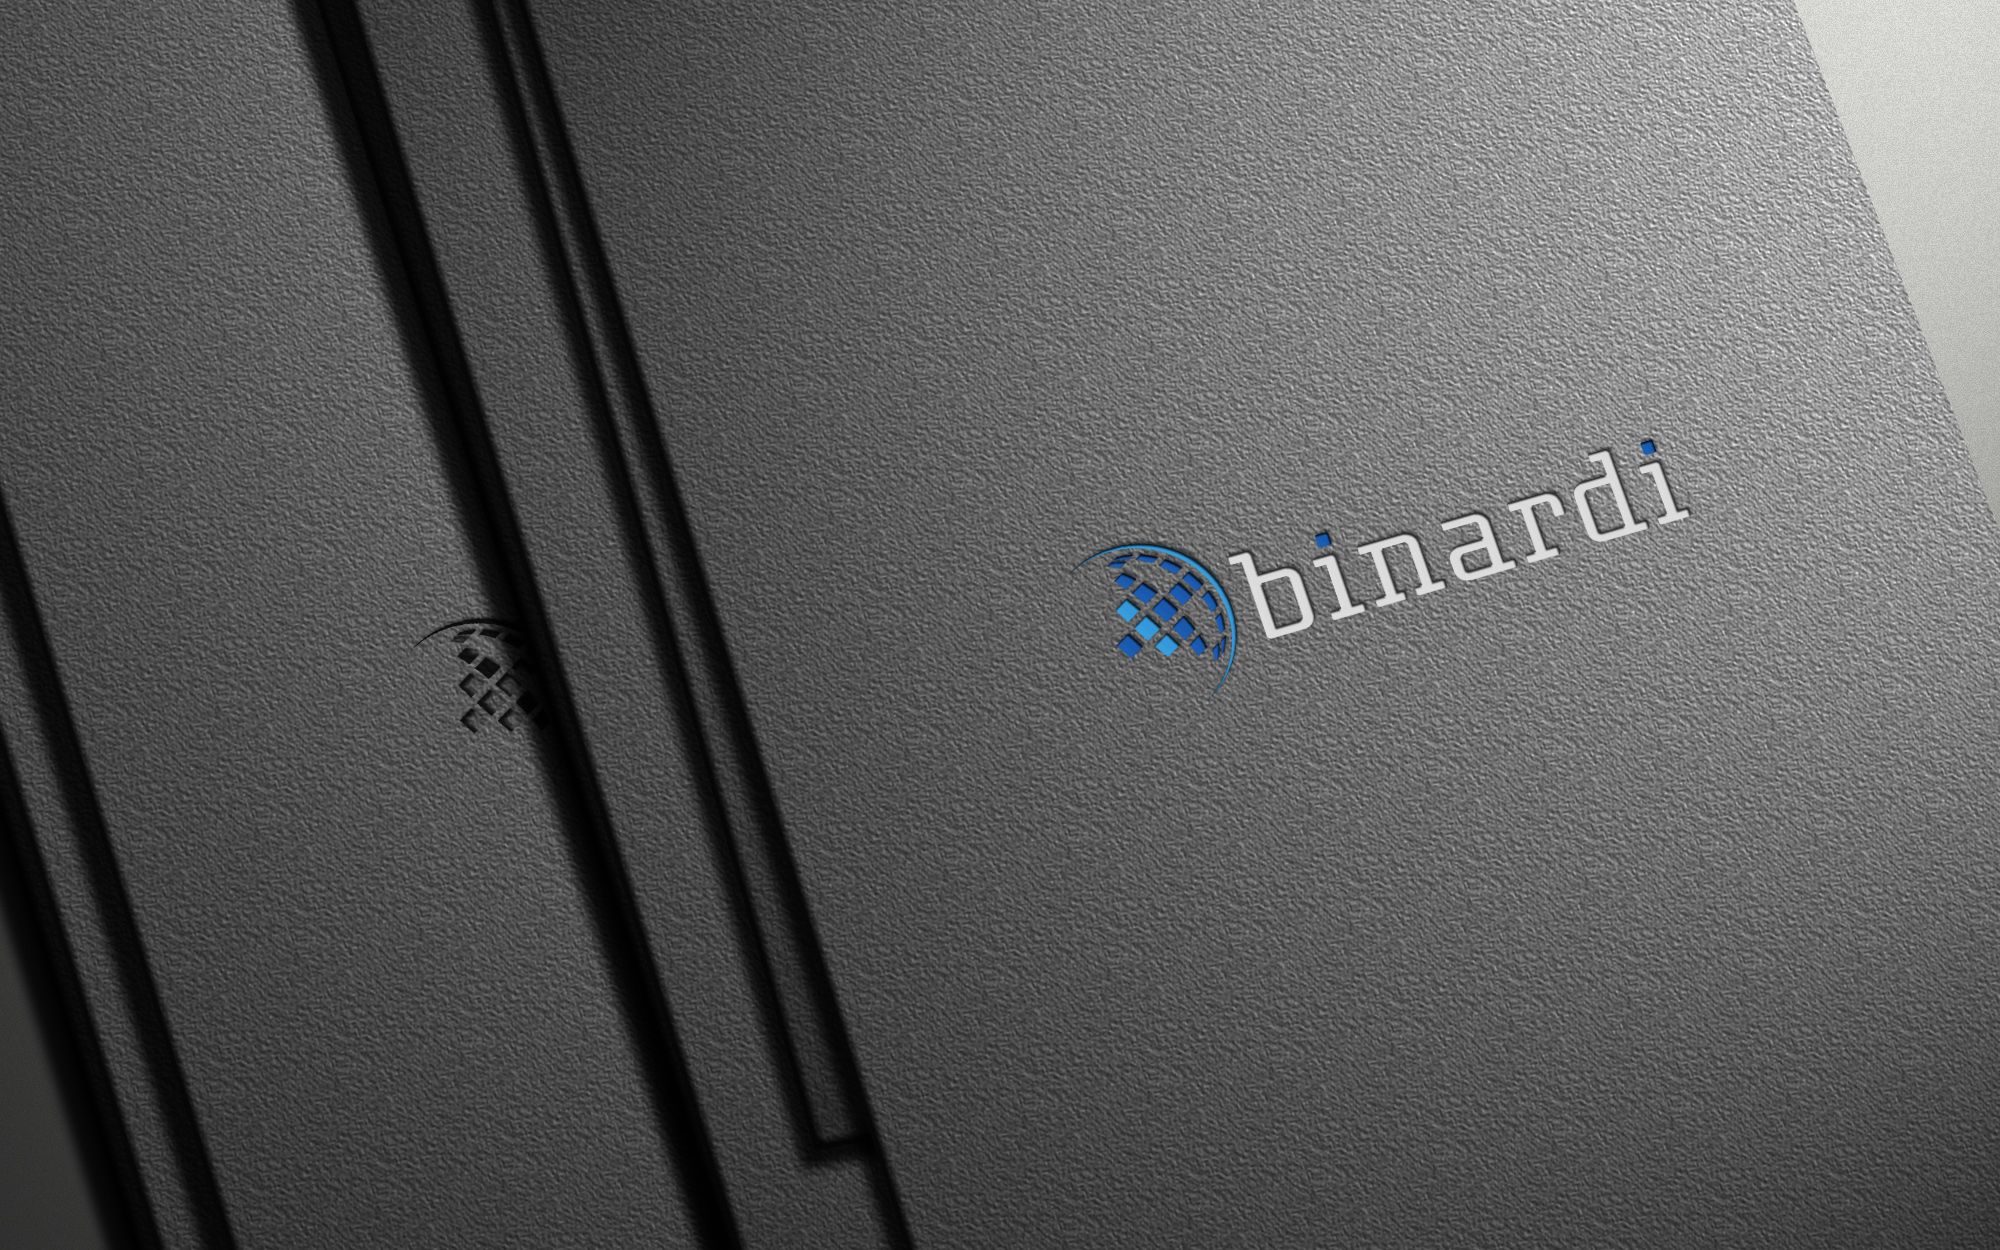 Логотип веб-студии binardi - дизайнер Gas-Min